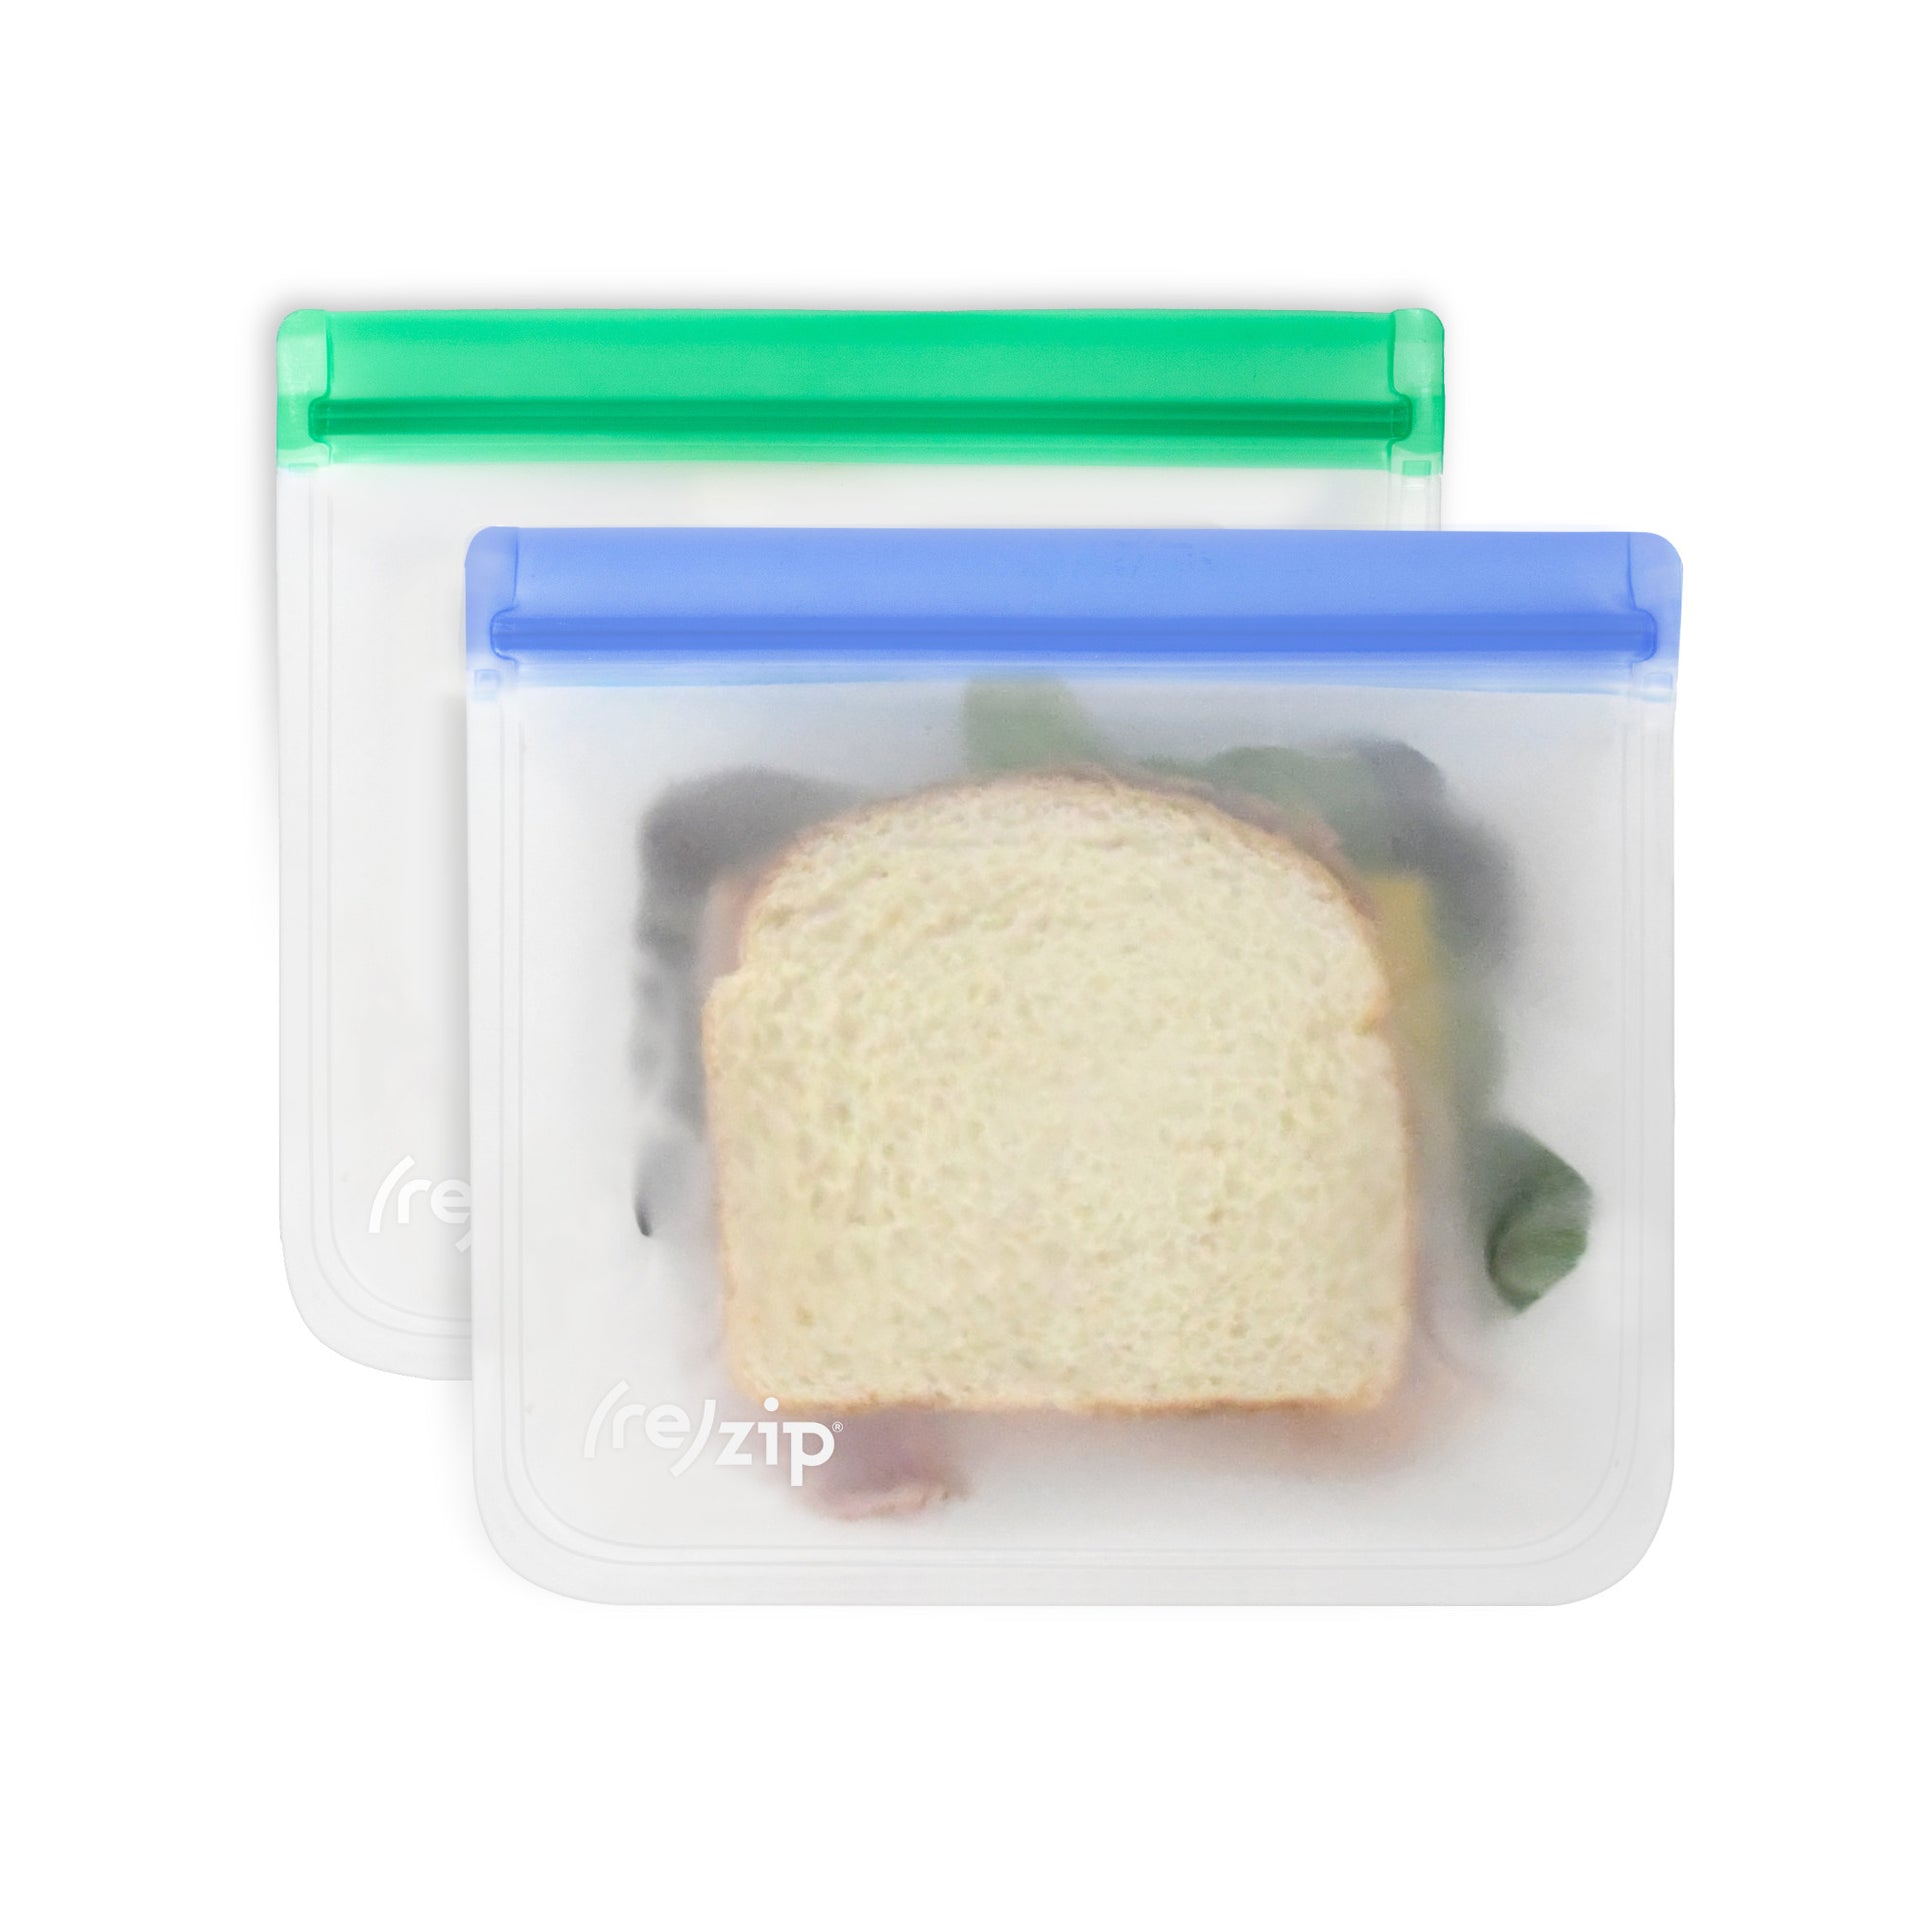 reusable leakproof sandwich bags 2-pack